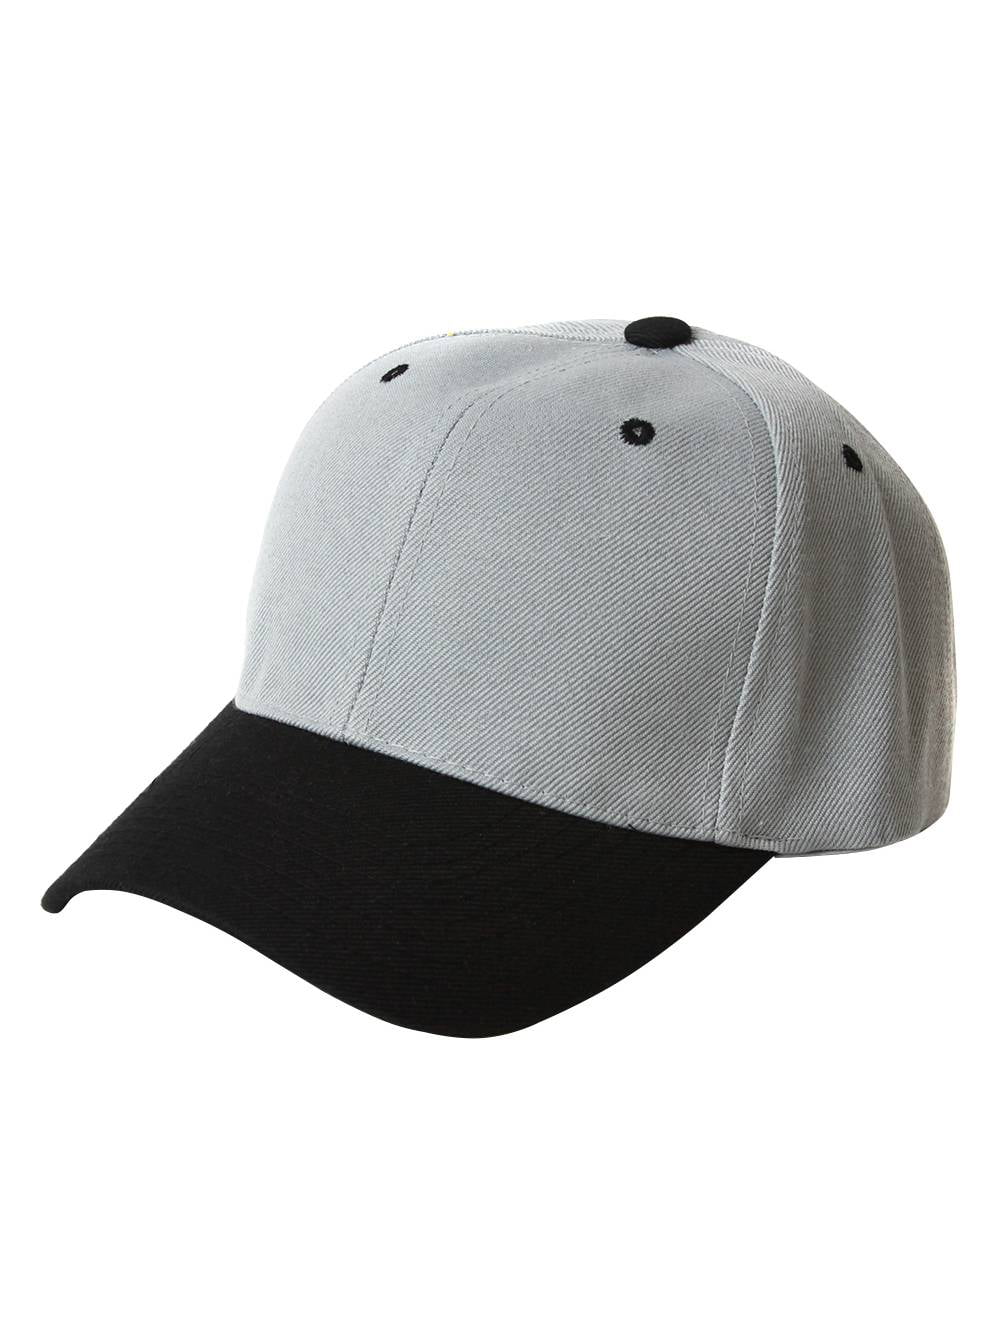 Plain Black Adjustable Dad Hat Strapback Solid Polo Baseball Cap Curve Bill 